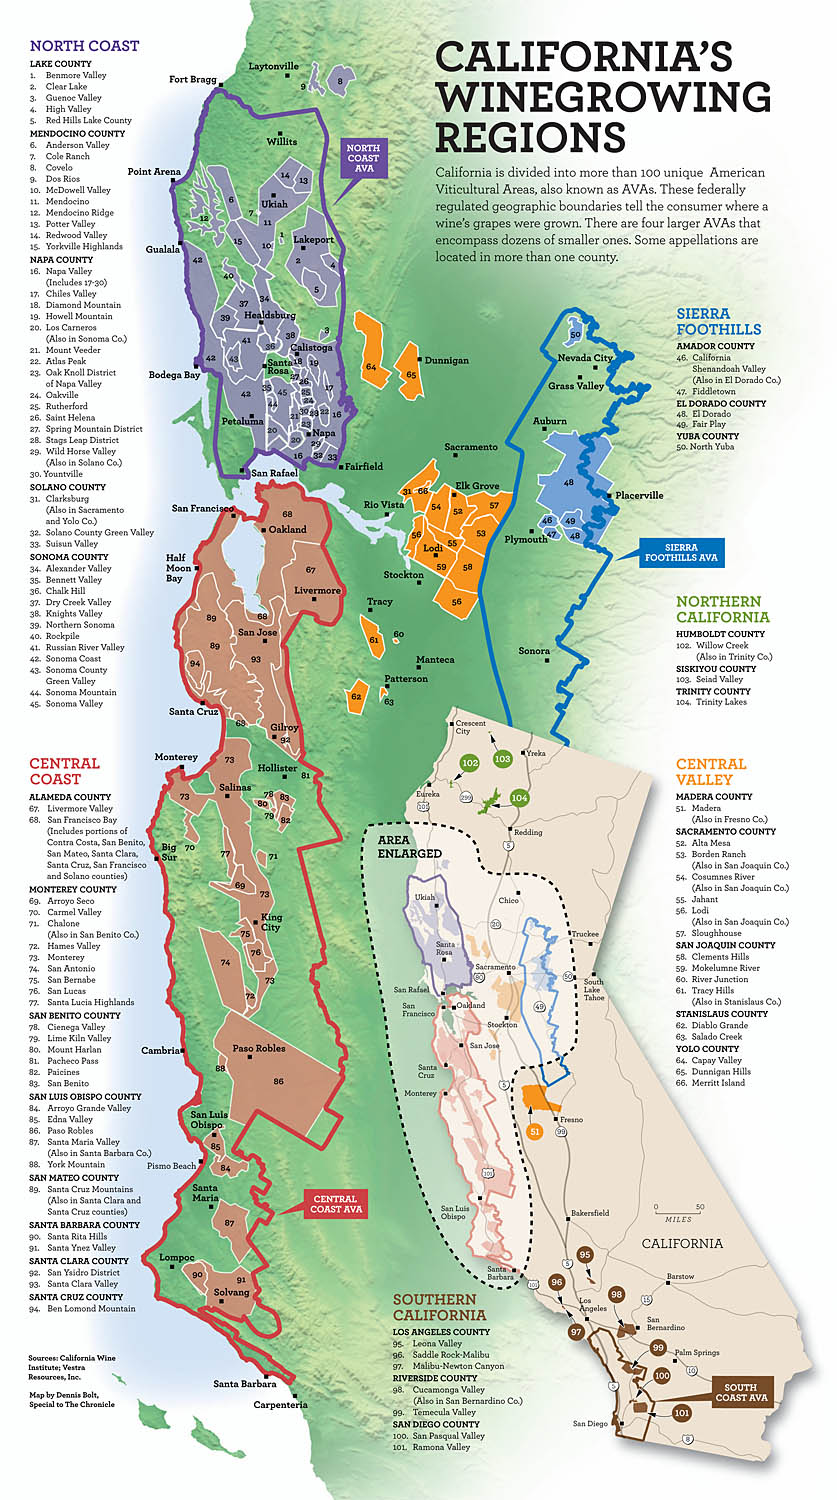 Wine regions in California